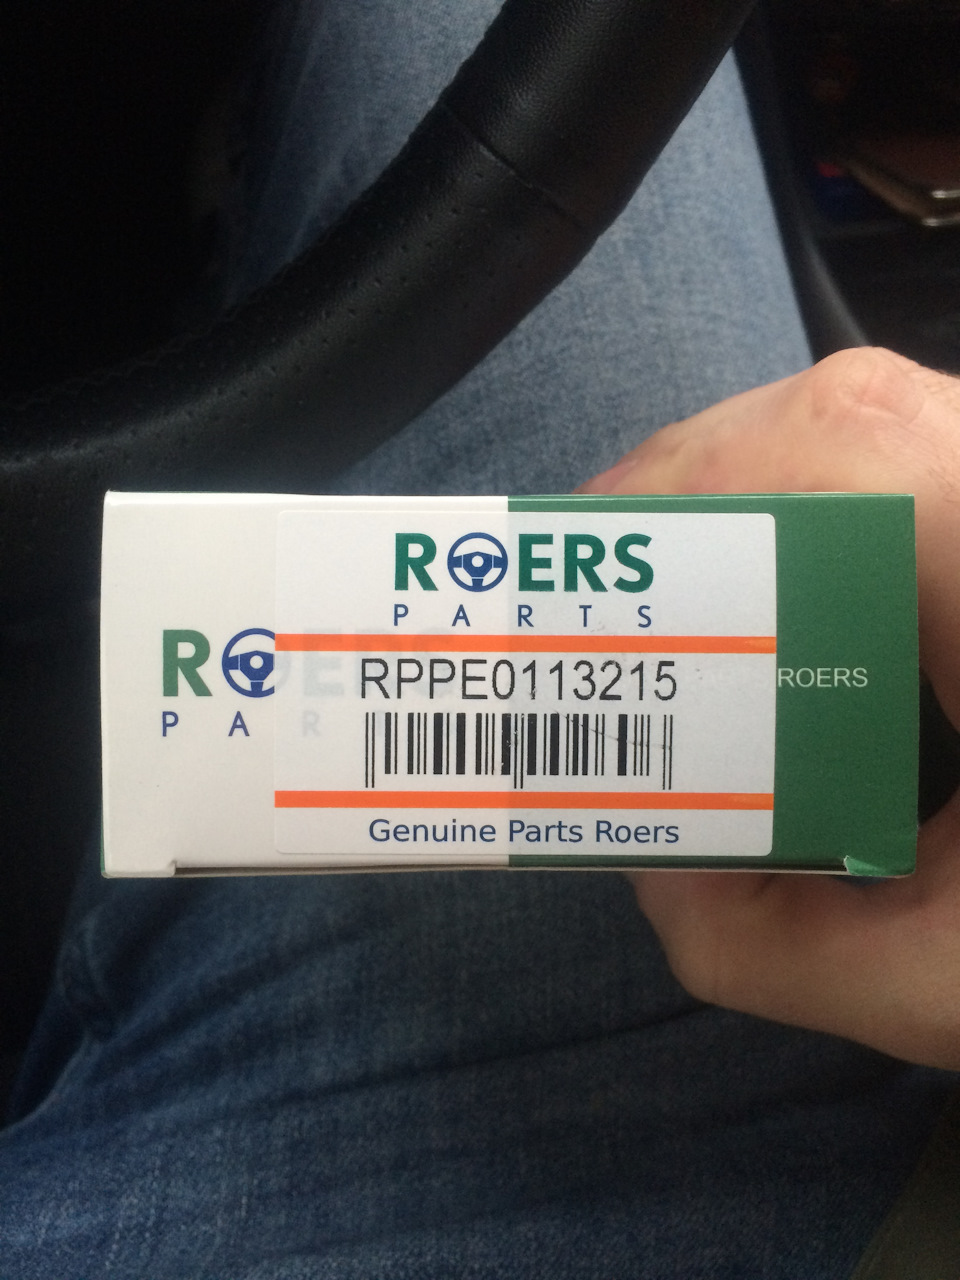 Roers parts производитель. Roers Parts ДМРВ. Rppe0113215. Roers-Parts запчасти Страна. Rp1621533028 roers-Parts на саньёнг.